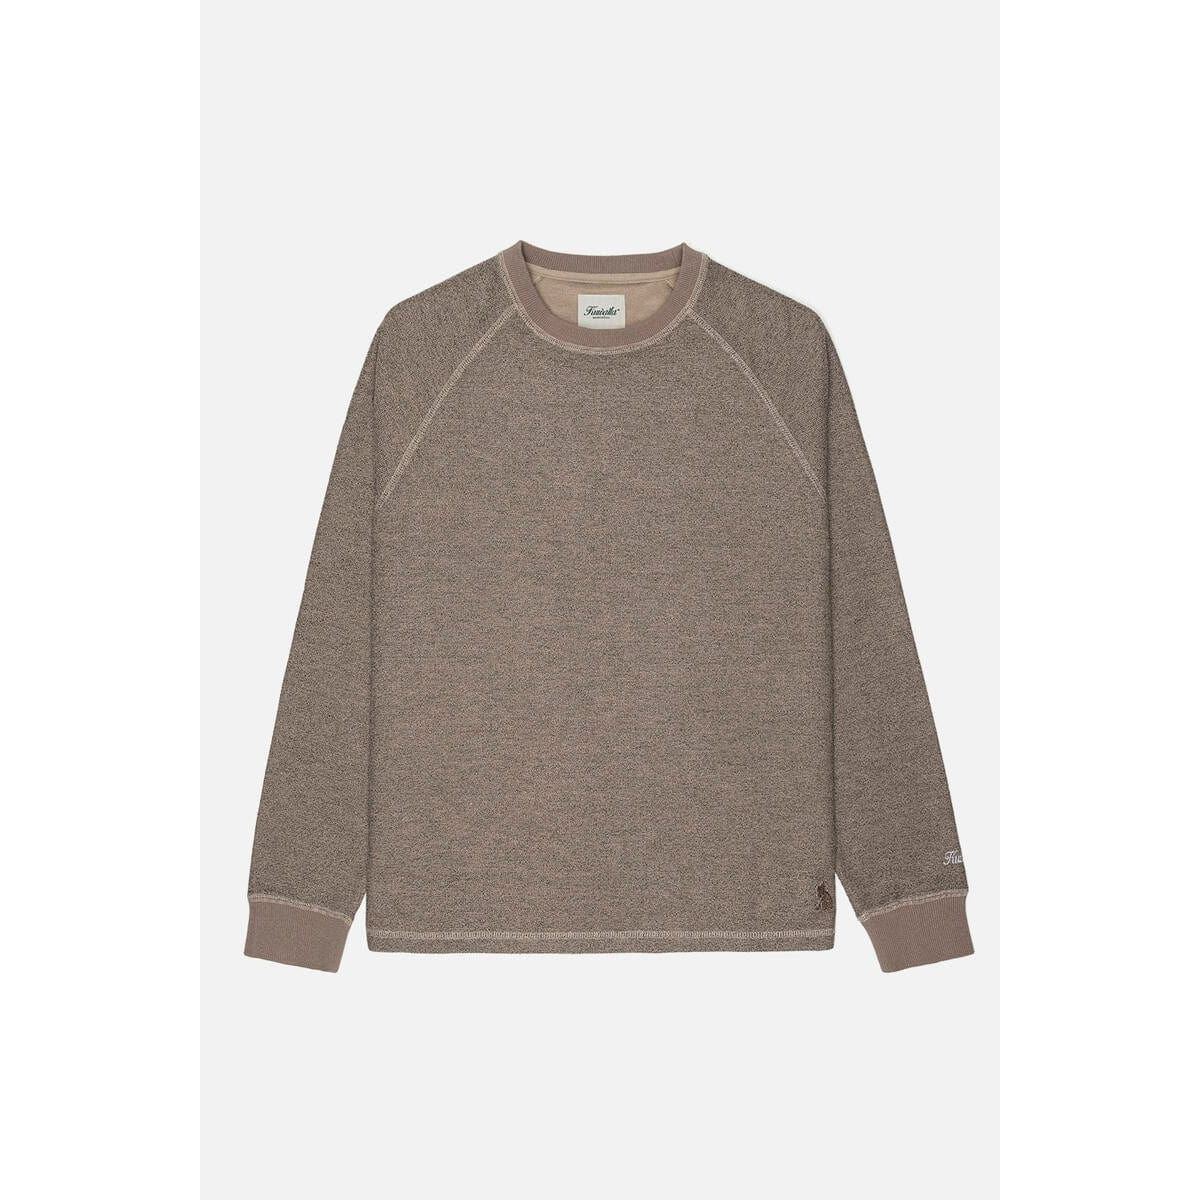 Kuwalla | Tee Taupe / S Kuwalla Marled Thermal Sweater